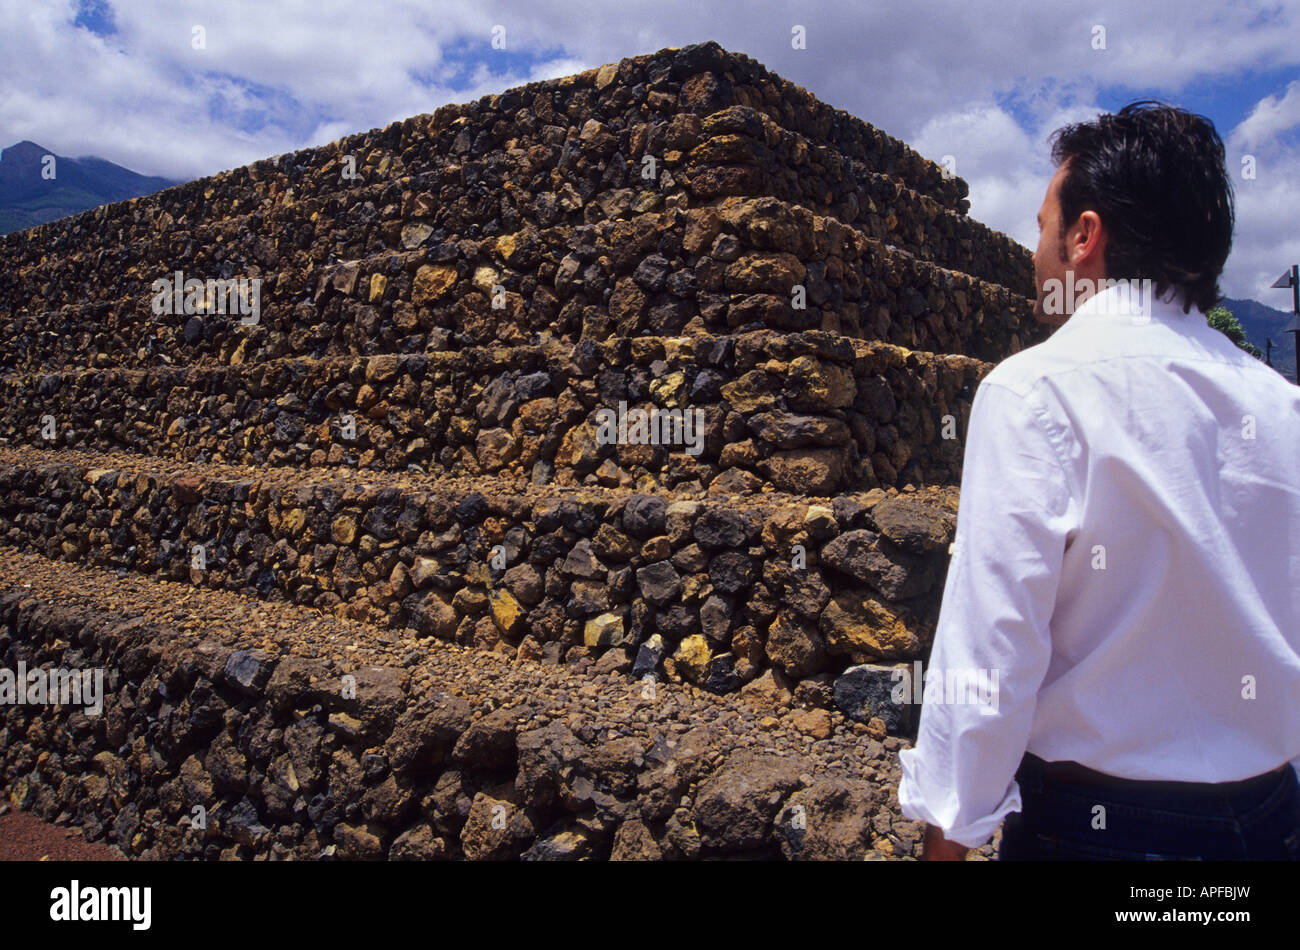 Ethnographic Park Piramides de Guimar TENERIFE ISLAND Canary Islands SPAIN Stock Photo